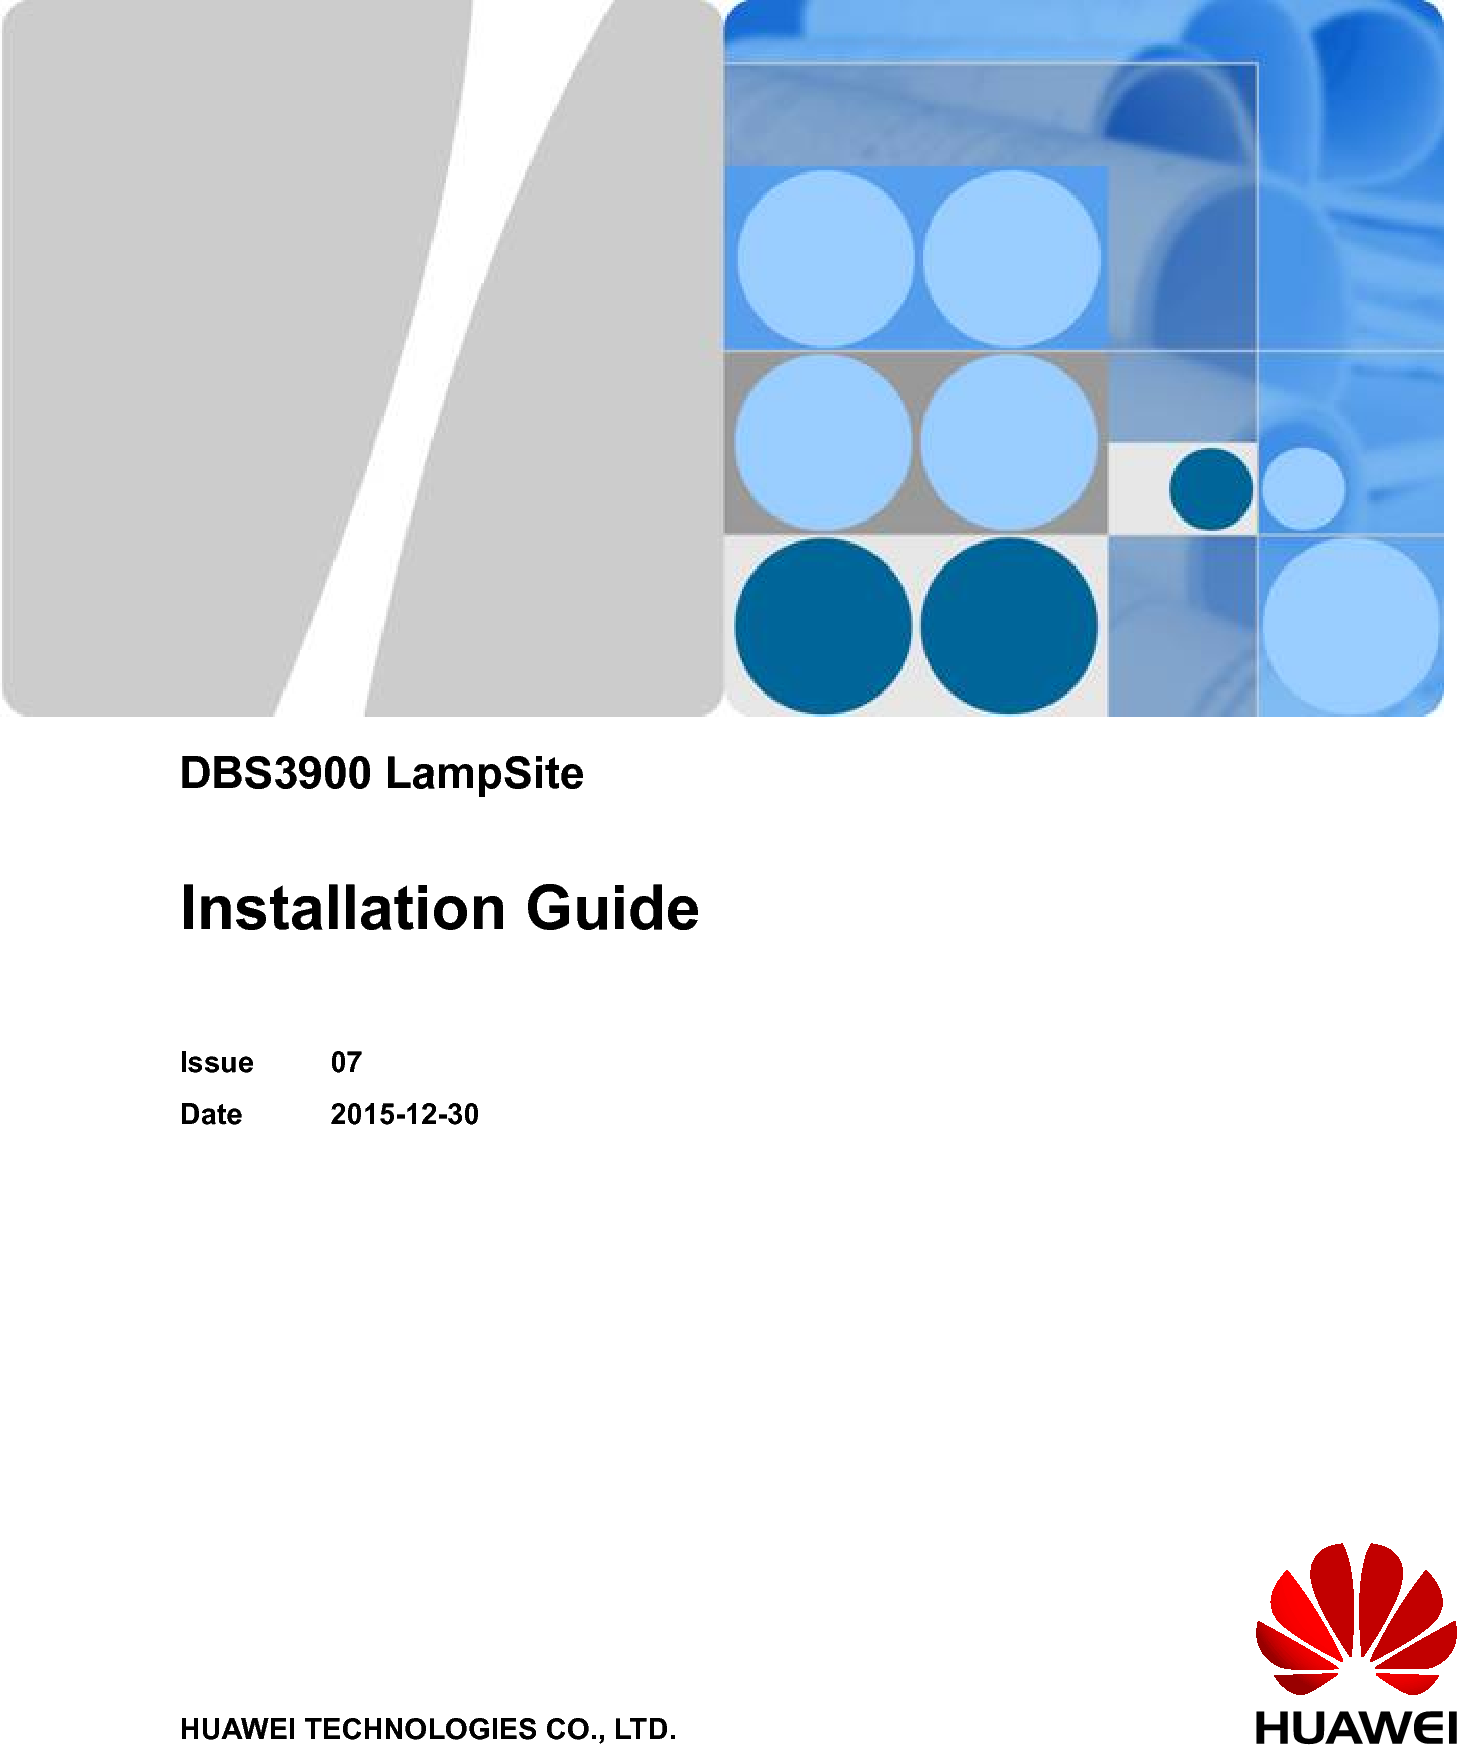 DBS3900 LampSiteInstallation GuideIssue 07Date 2015-12-30HUAWEI TECHNOLOGIES CO., LTD.